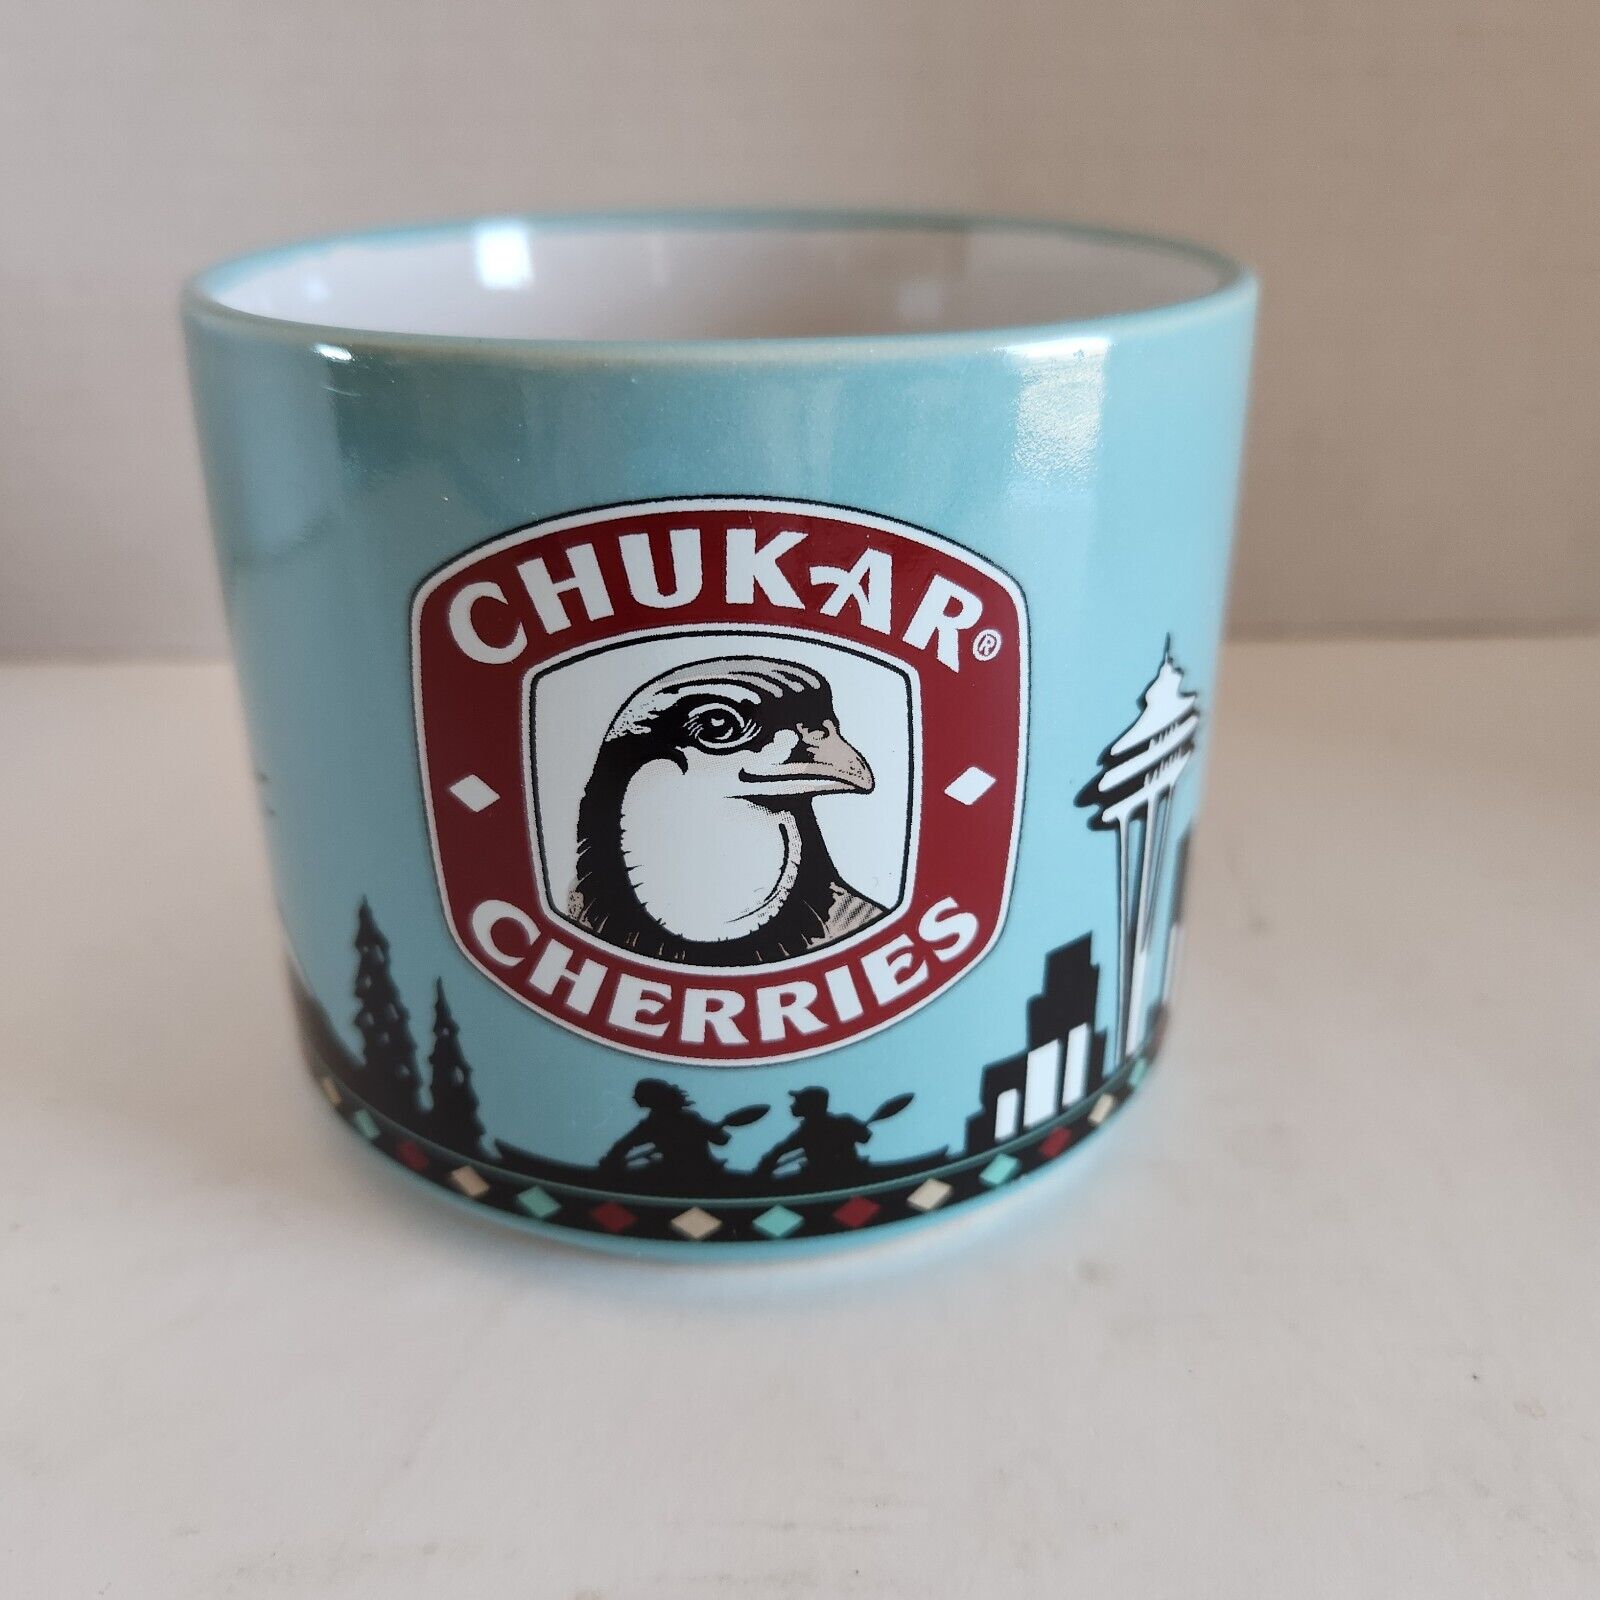 Chukar Cherries Ceramic Coffee Mug/Cup Seattle WA Space Needle 16 Oz 2022 Cherry